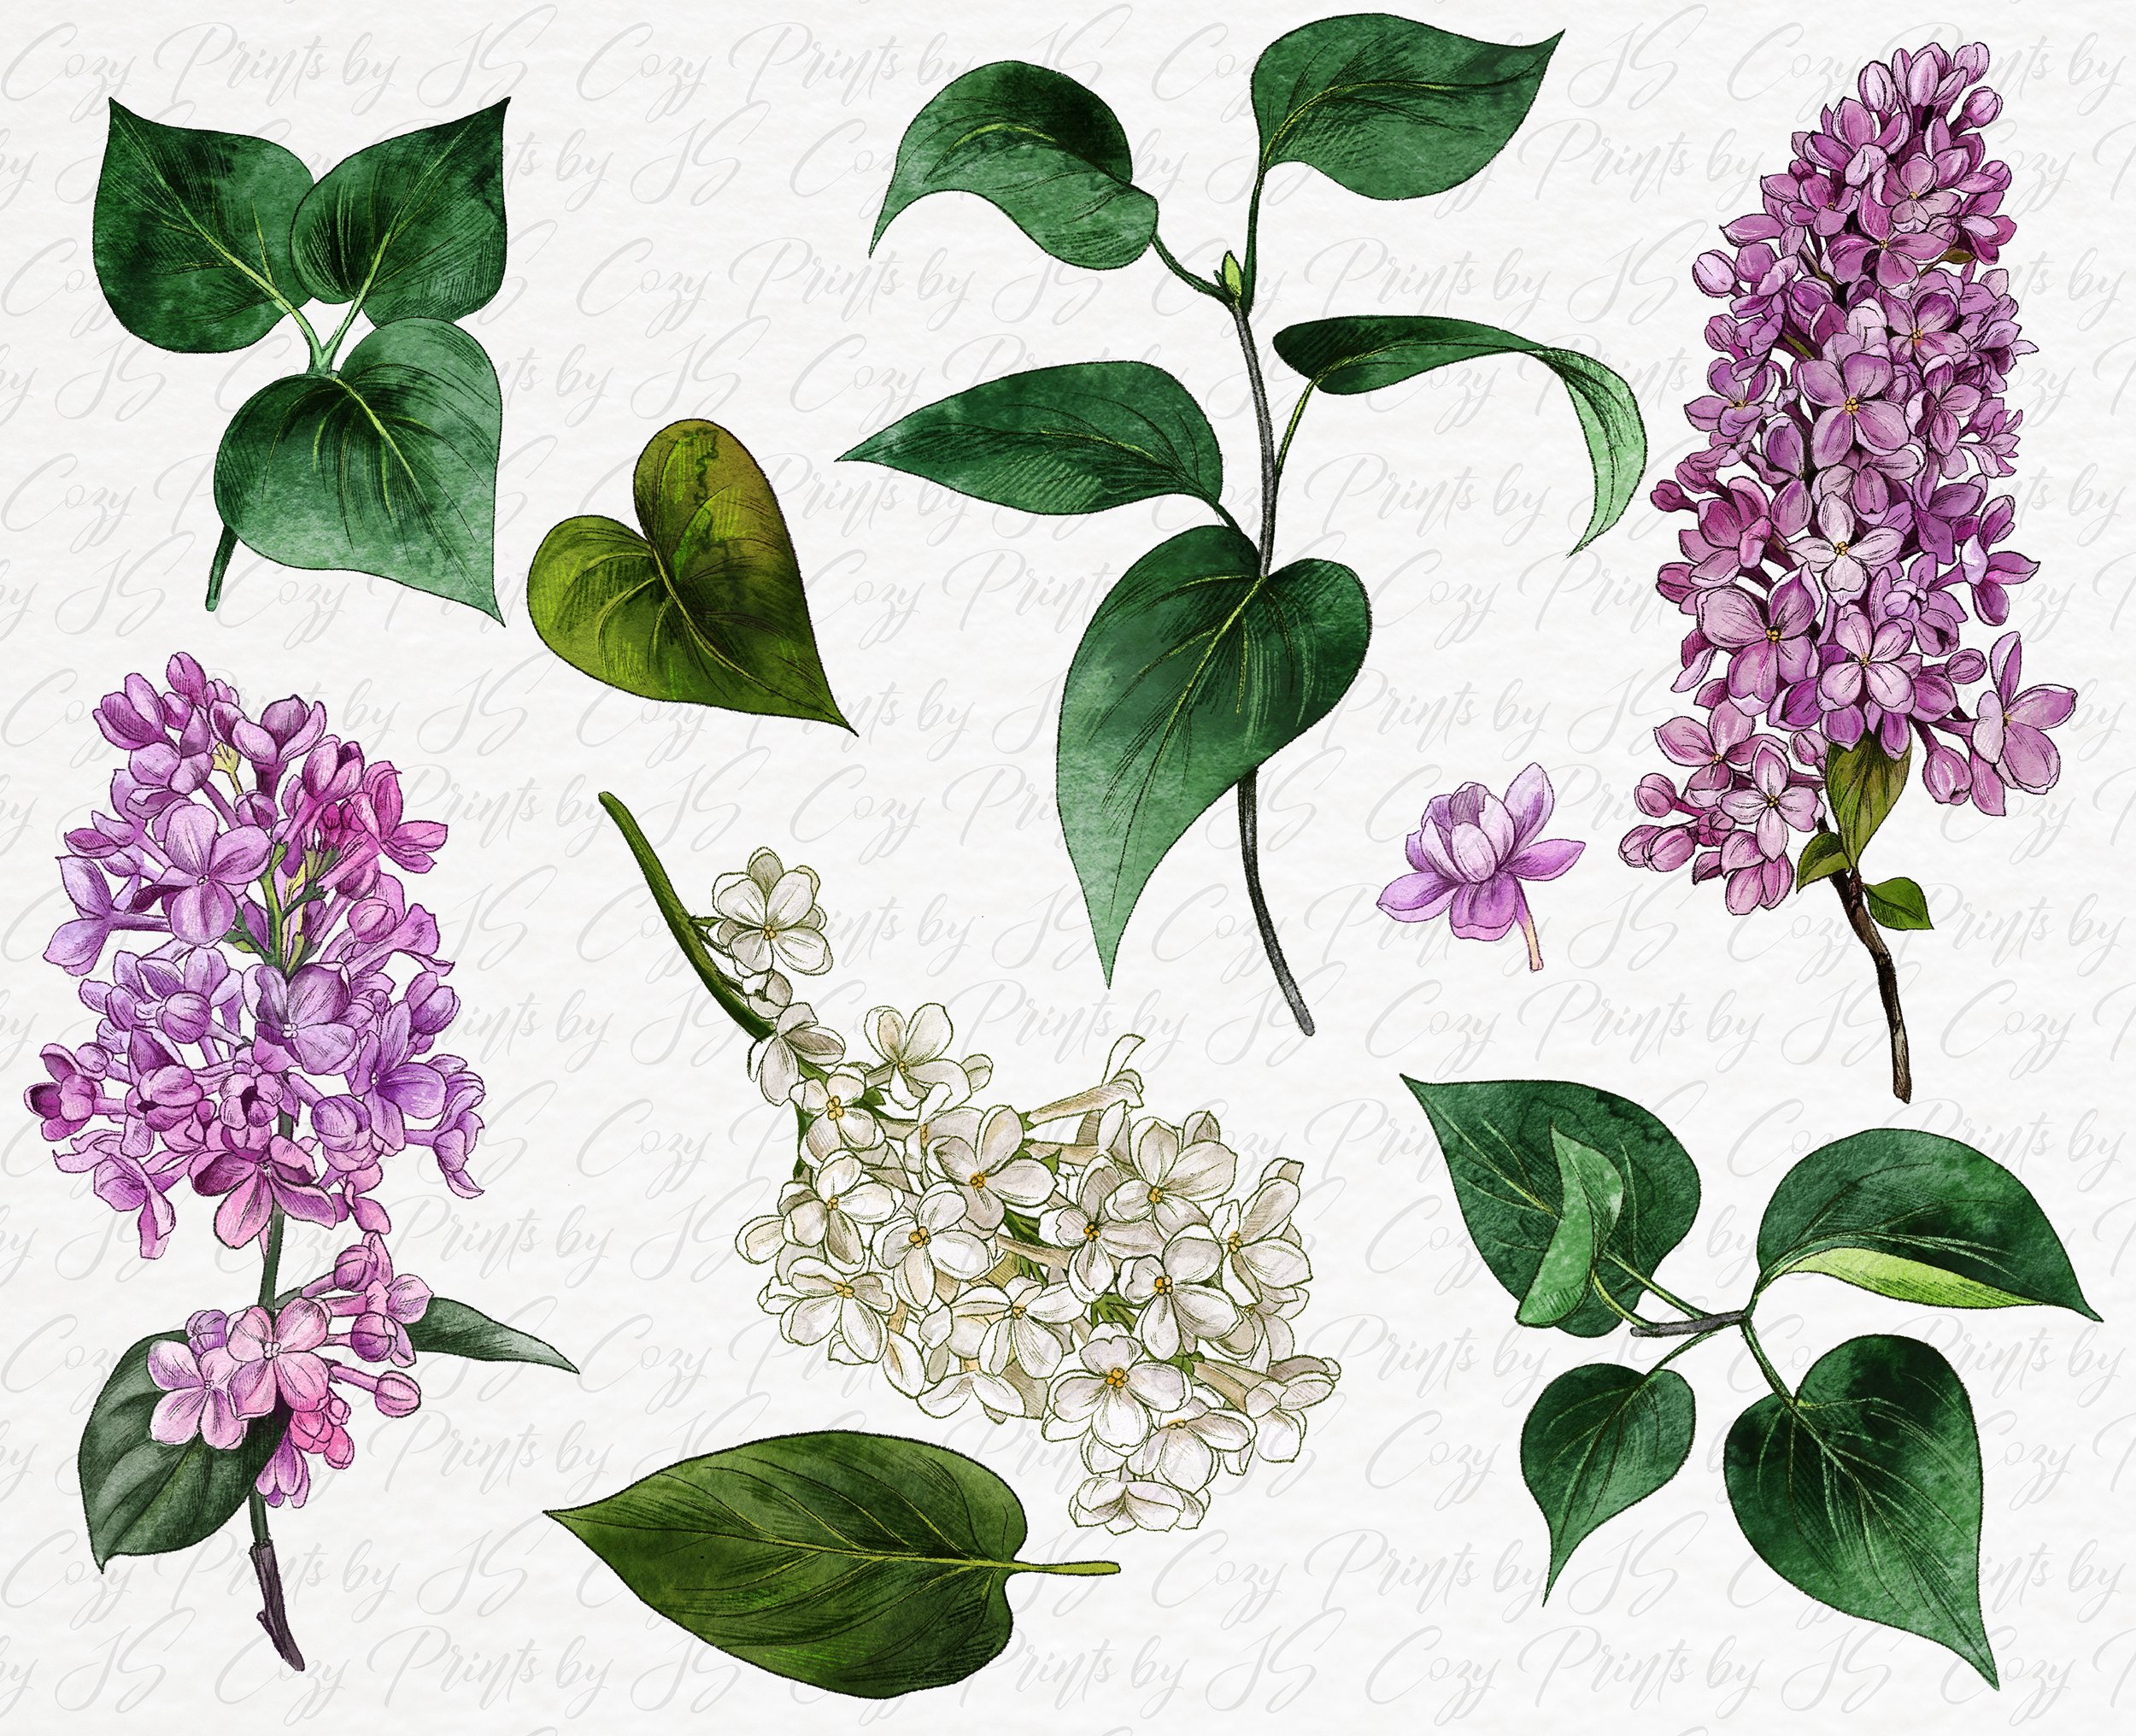 Lilac Dreams - Floral Watercolor Clipart Set